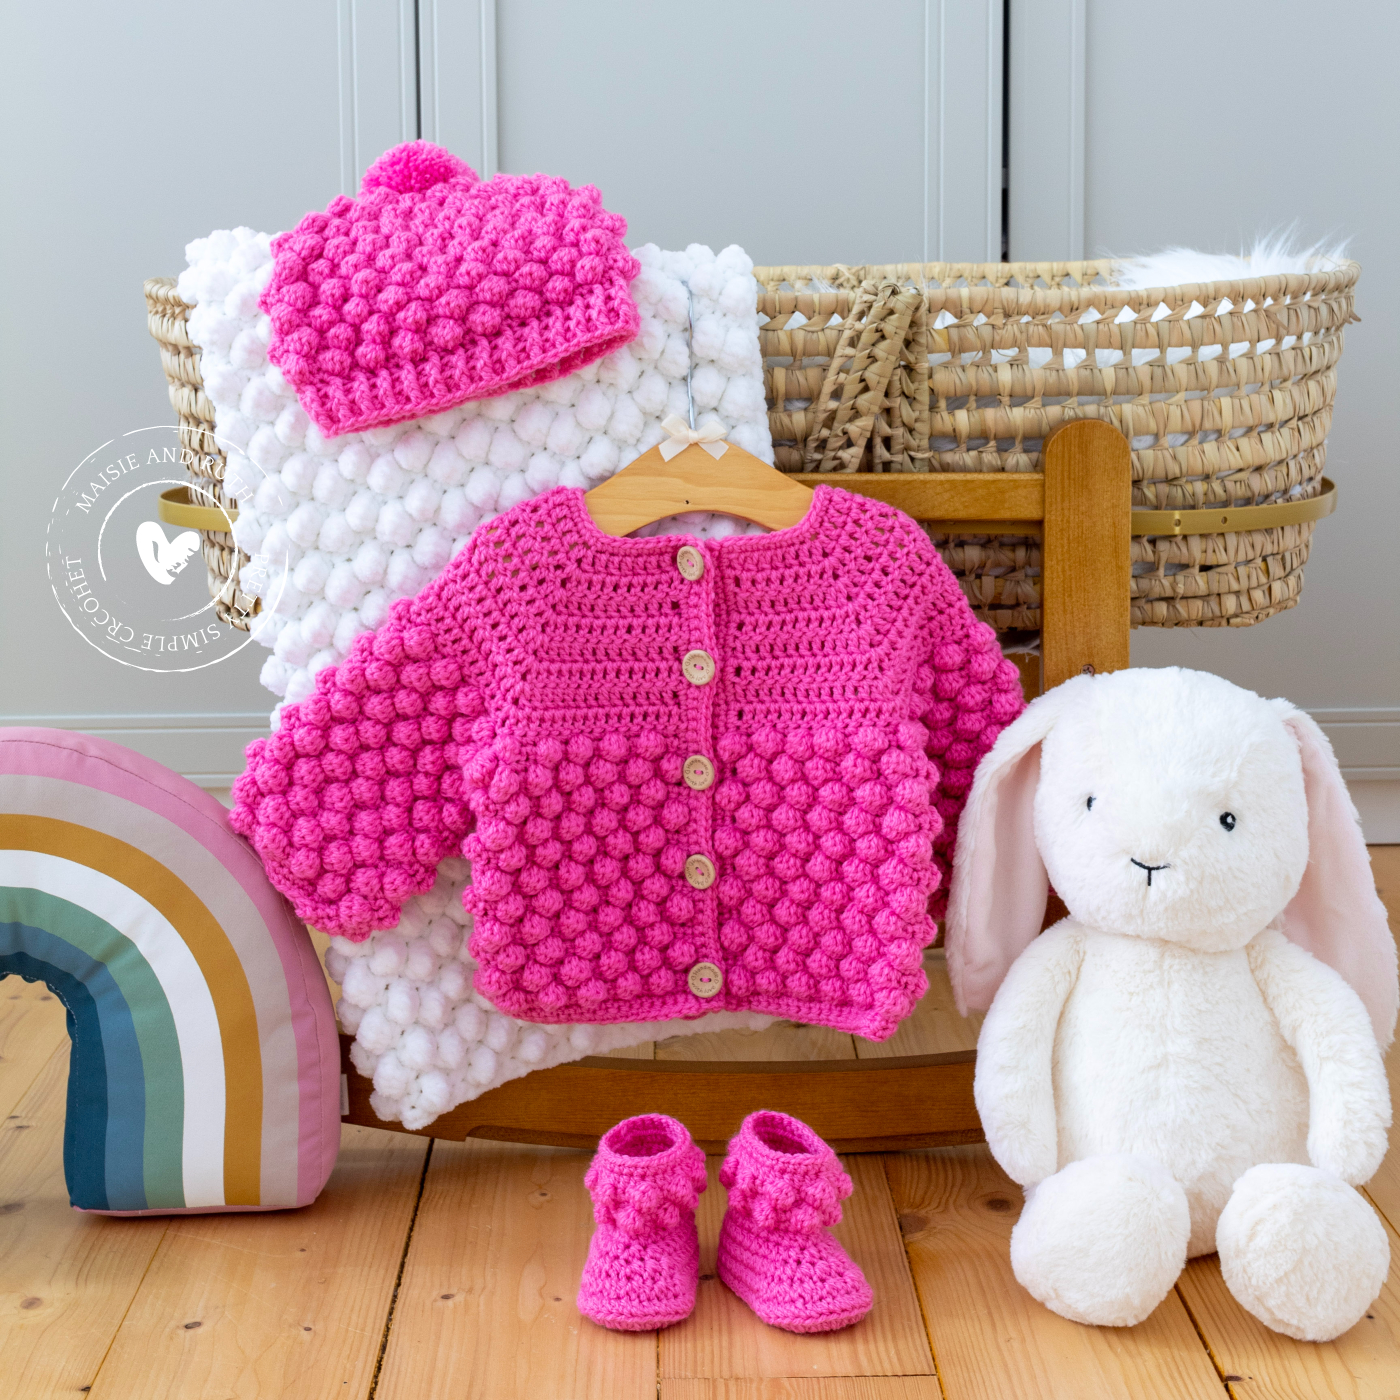 crochet bobble baby beanie pink layette